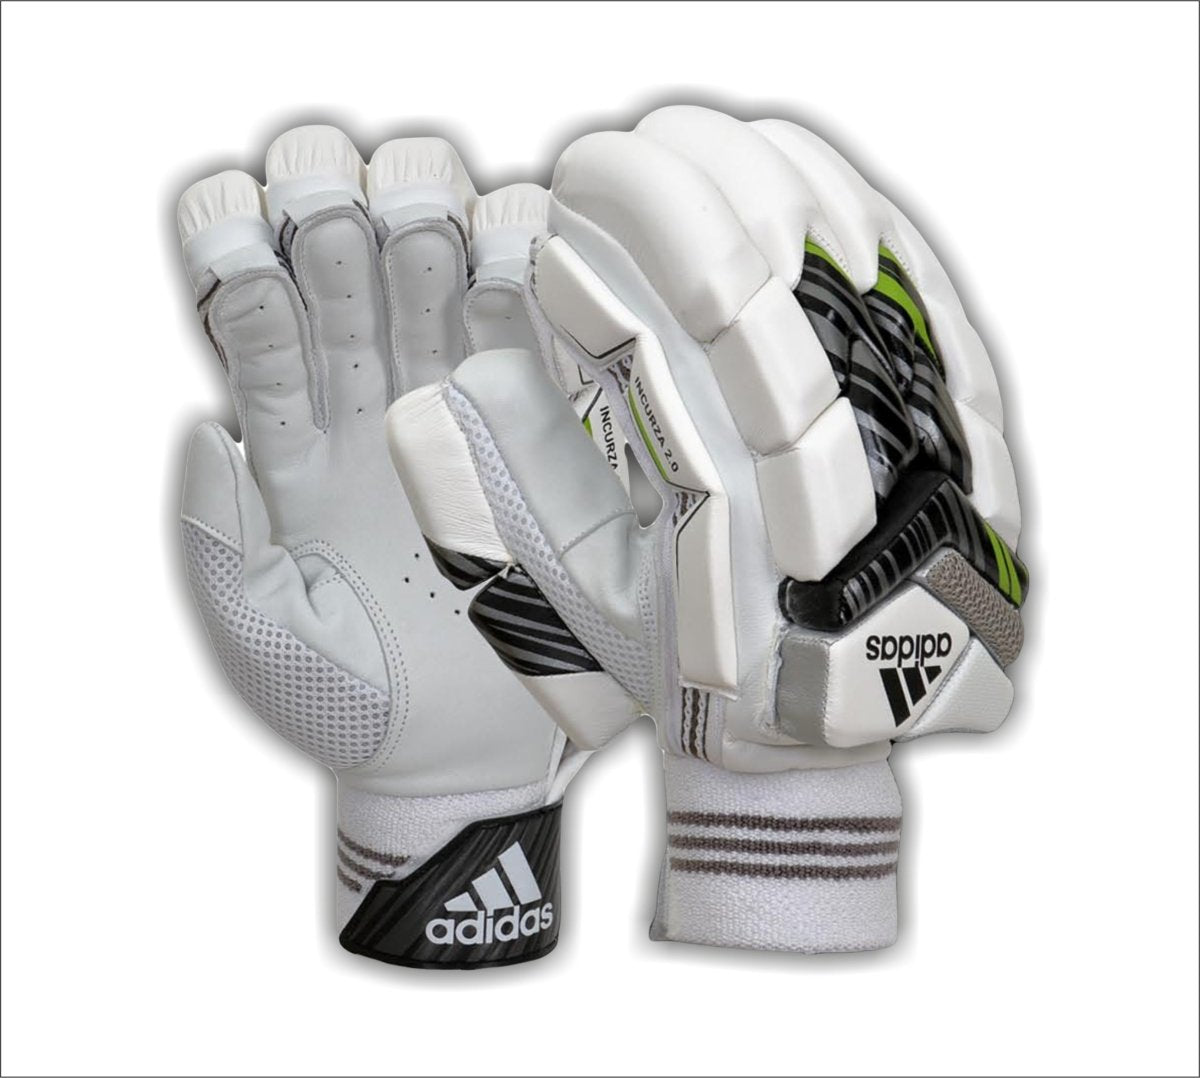 Adidas Incurza 2.0 Cricket Batting Gloves.